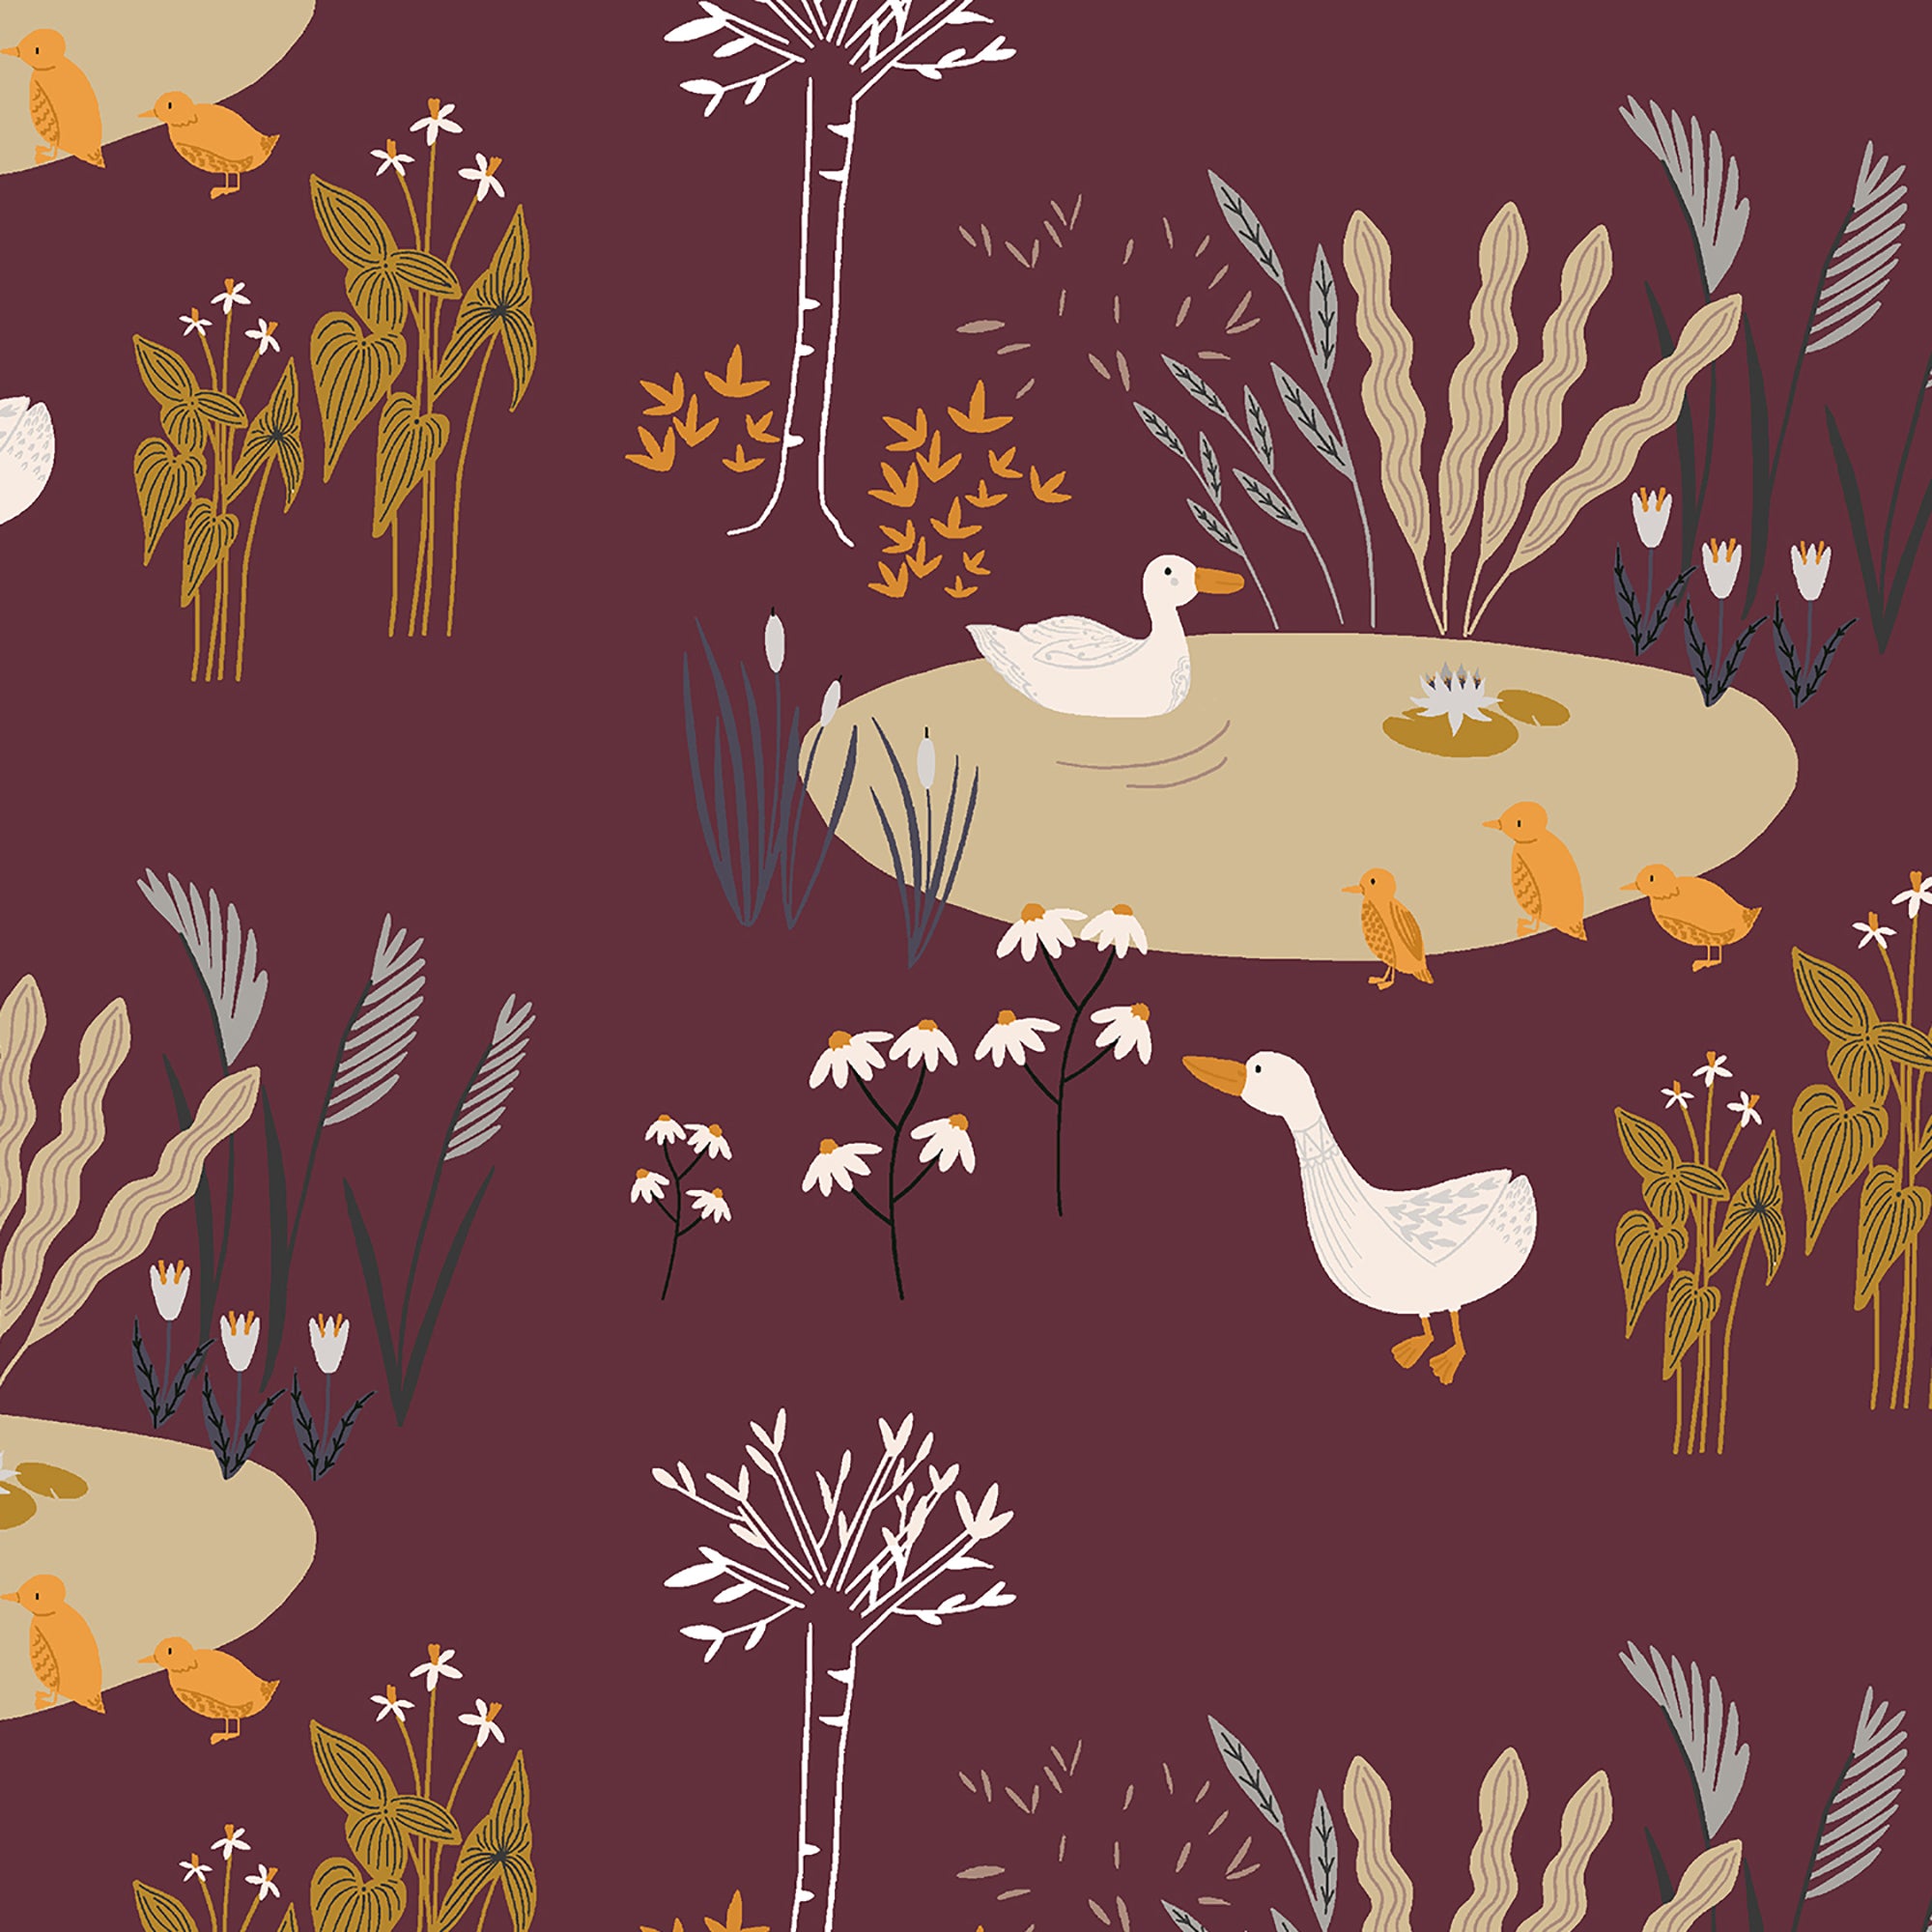 Pond Life - Ducks Autumn Fabric